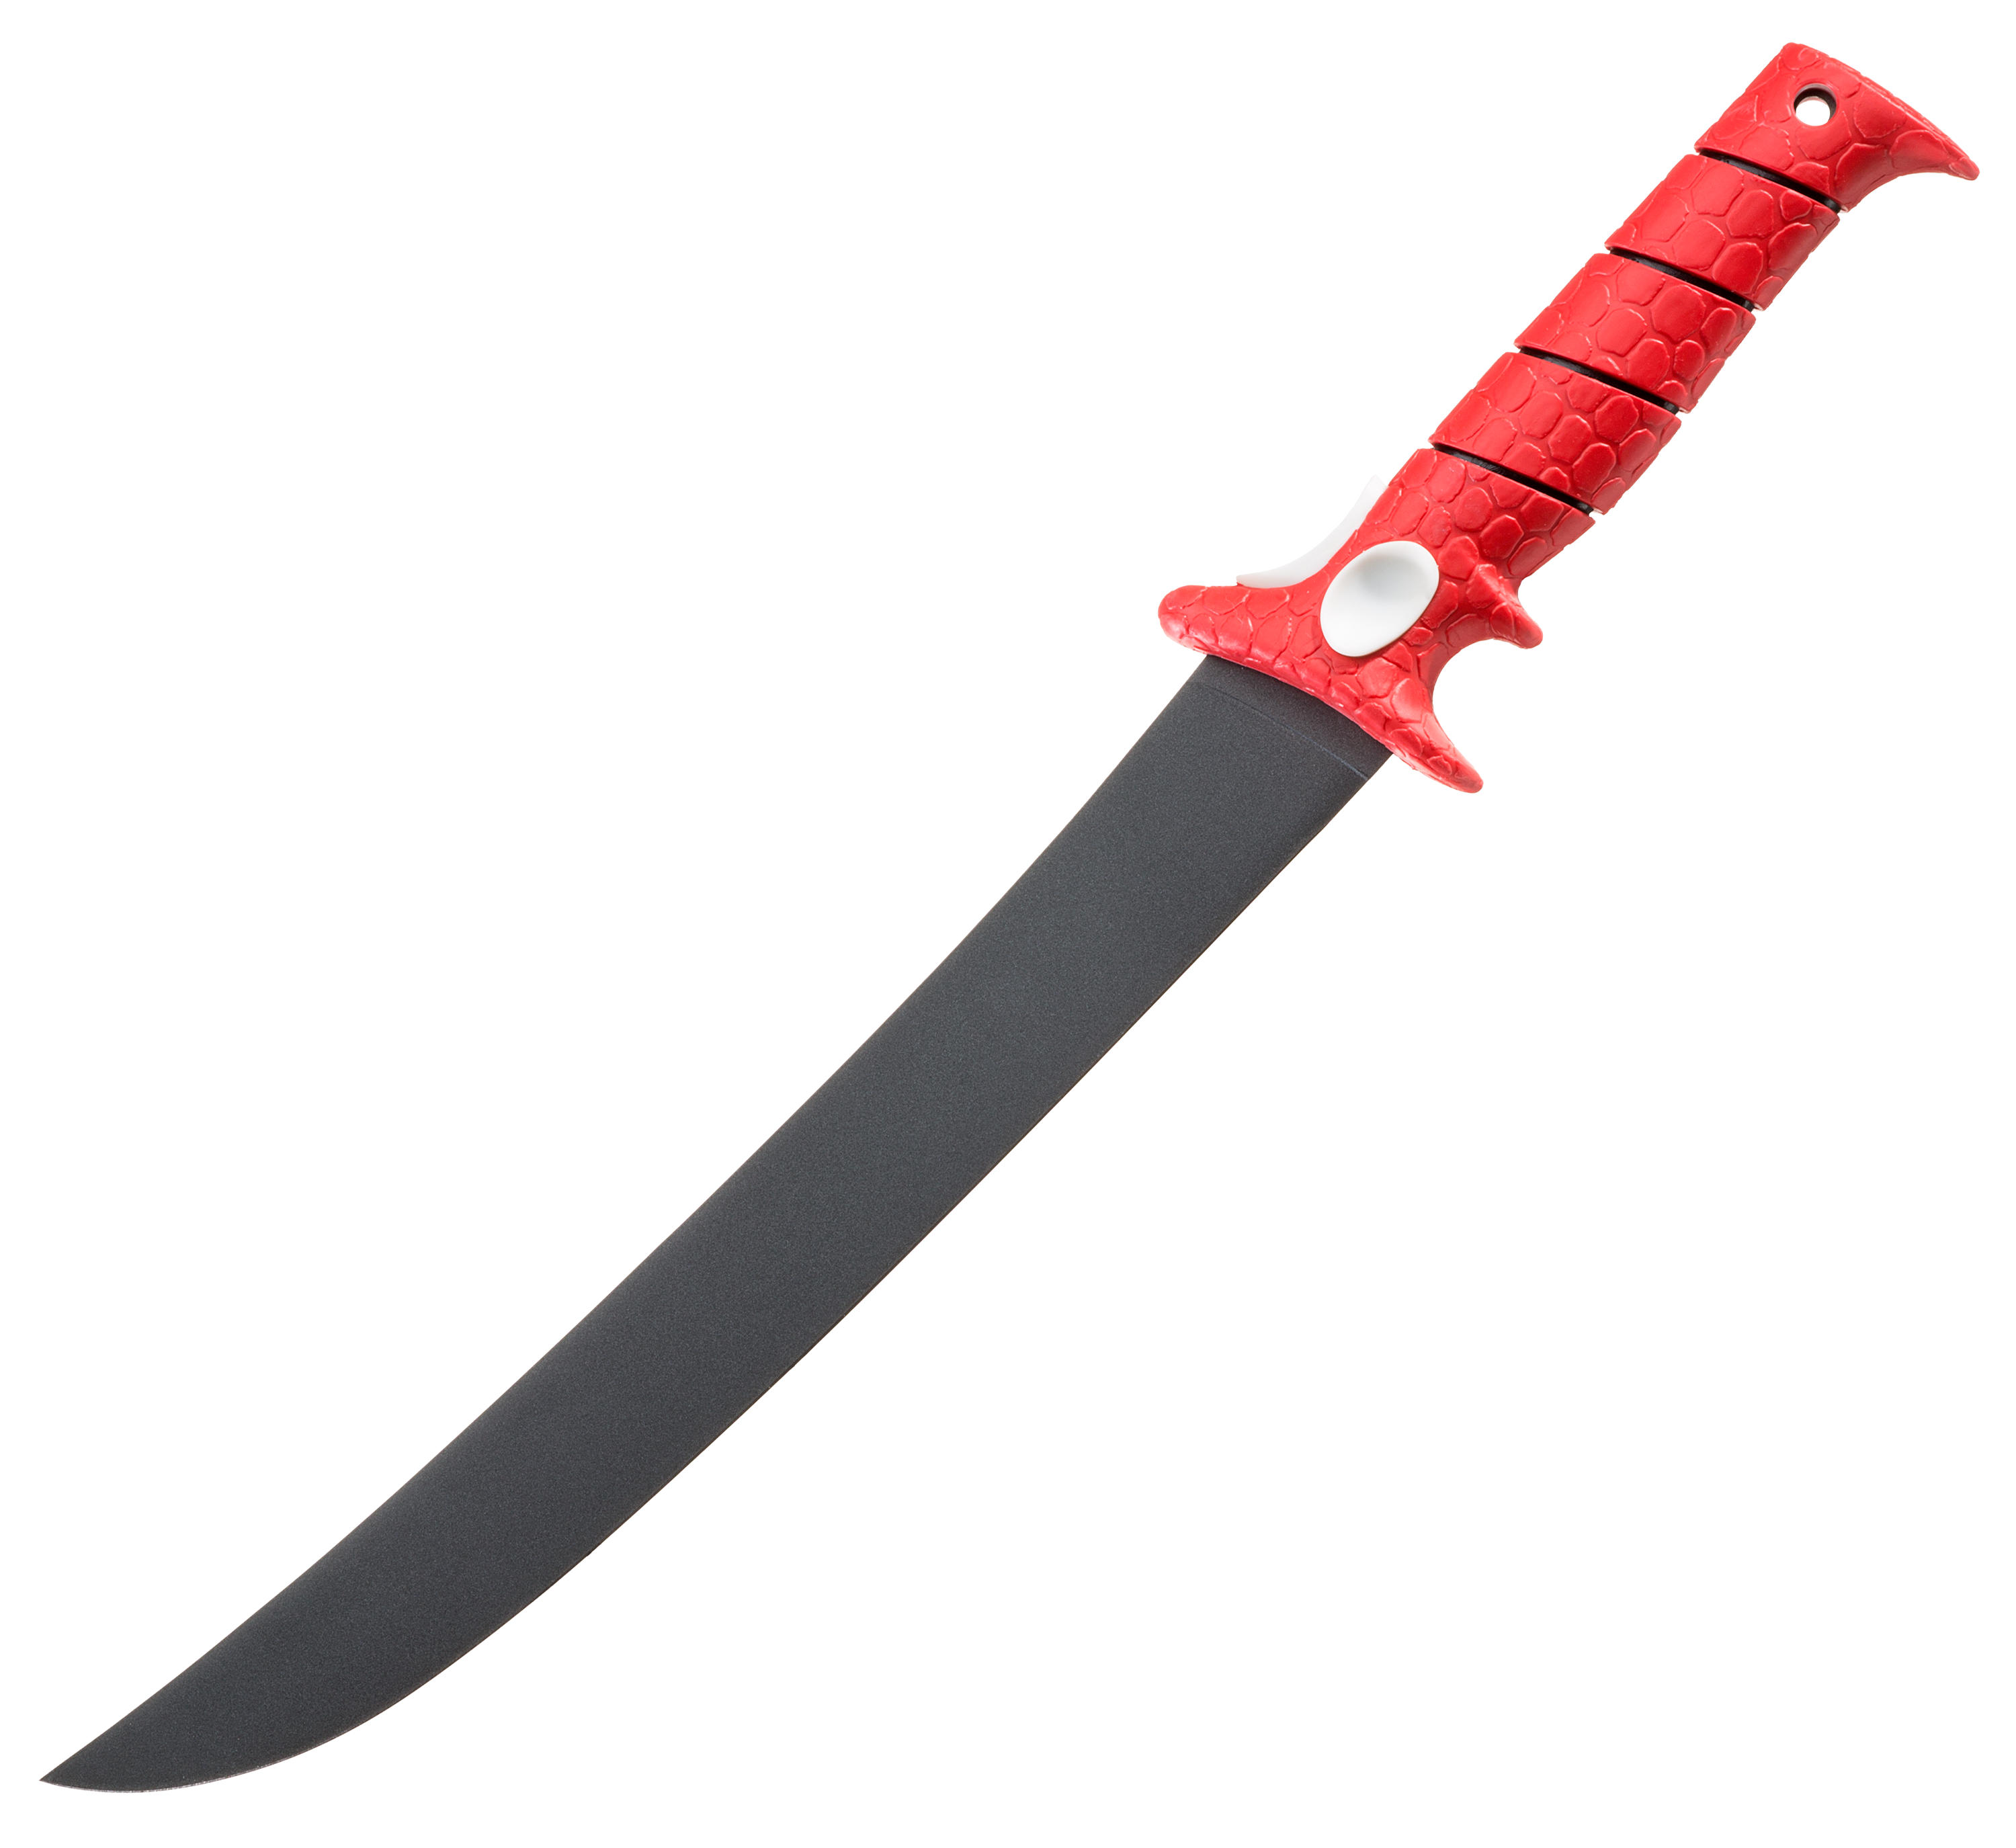 Bubba Blade 12 inch Flex Fillet Knife